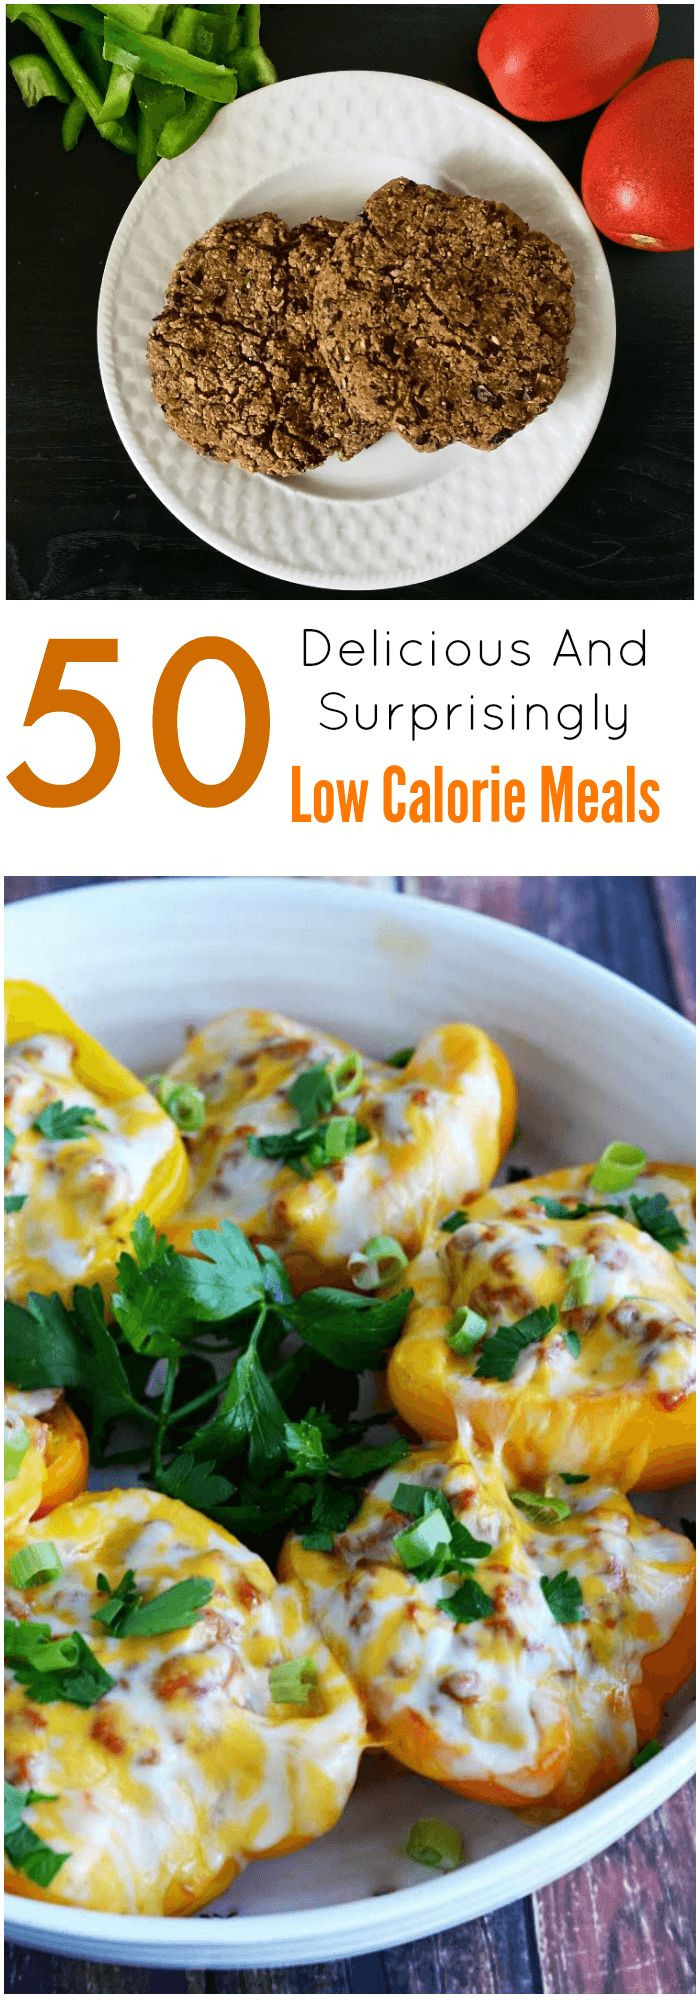 Delicious Low Calorie Recipes
 50 Delicious And Surprisingly Low Calorie Meals